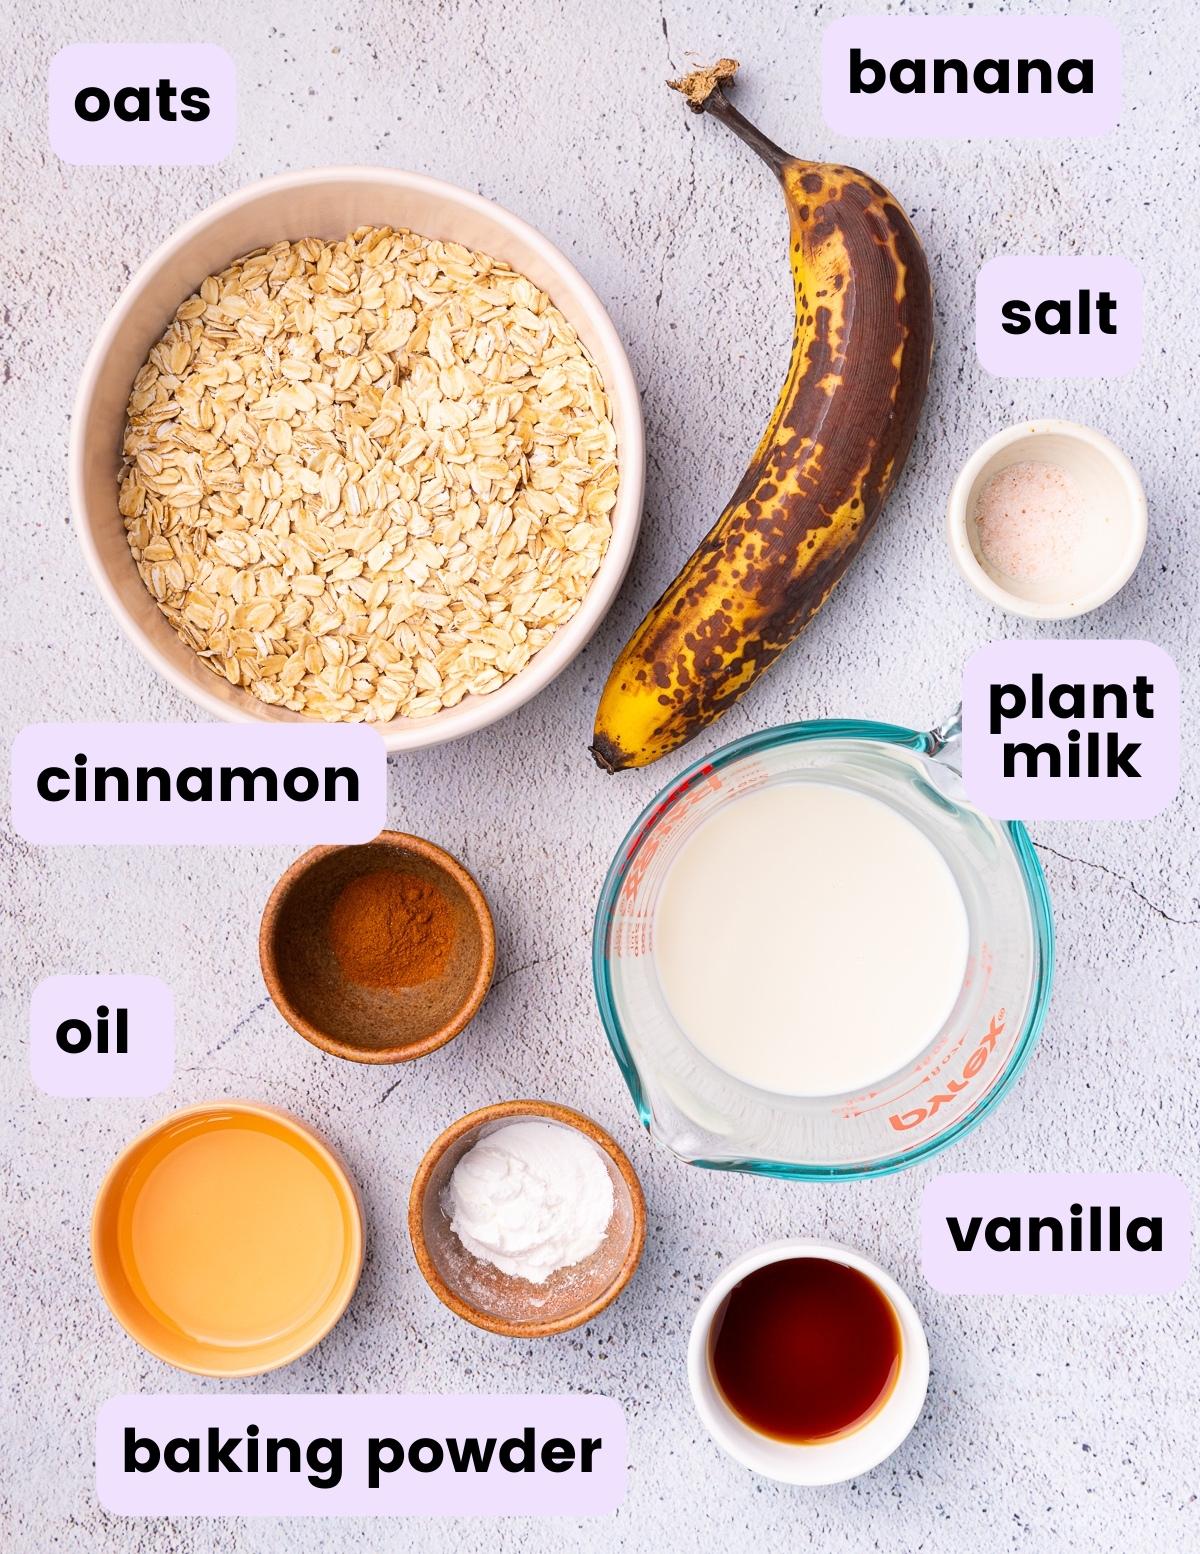 oats, banana, cinnamon, salt, plant, milk, oil, baking powder, vanilla,